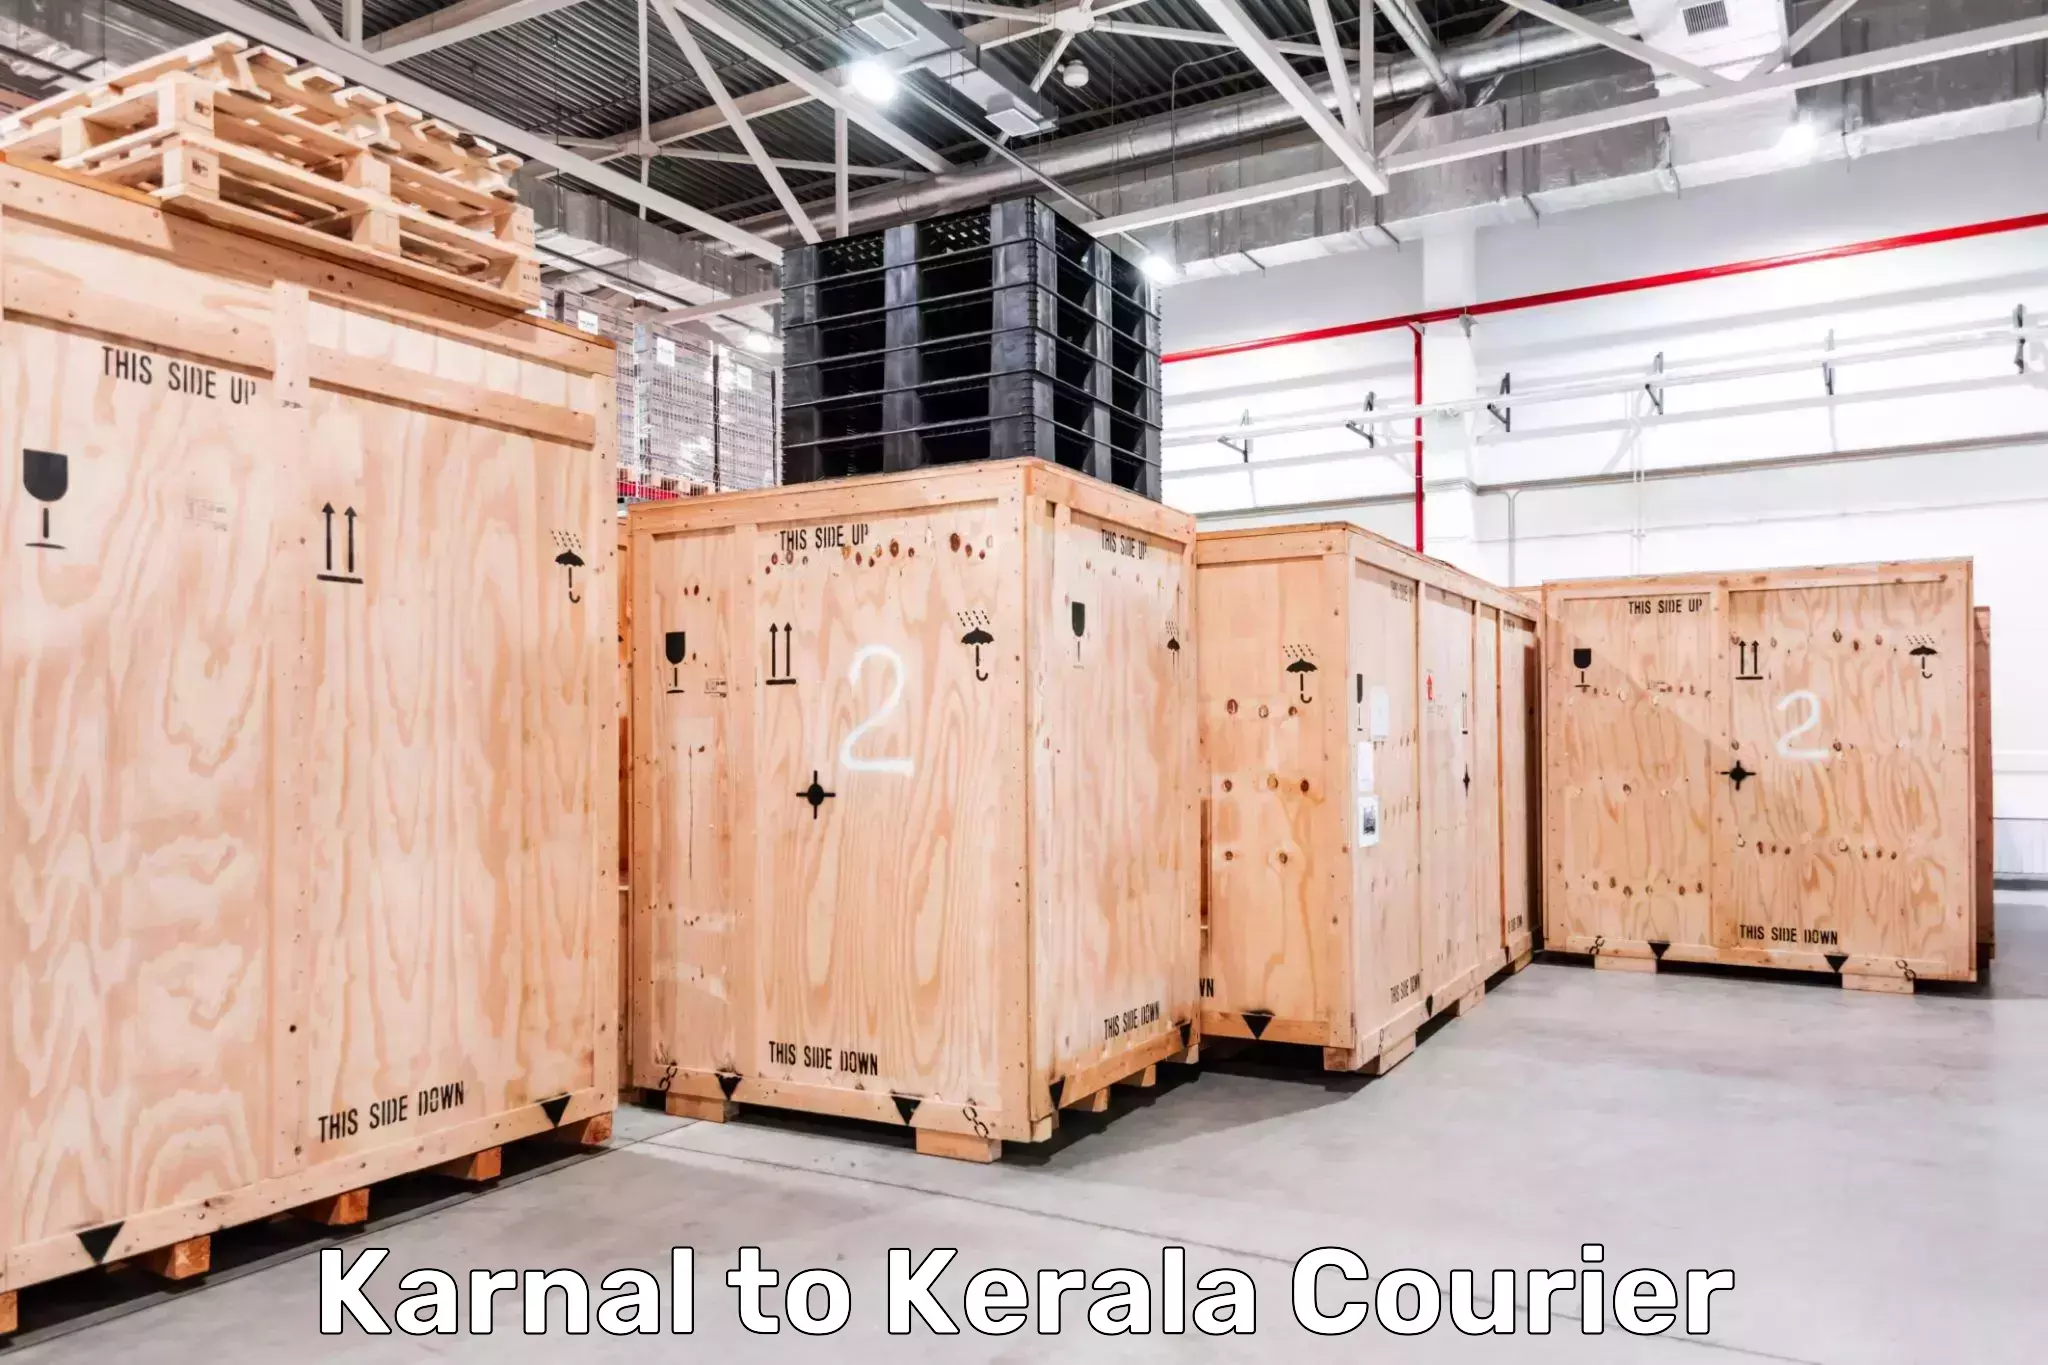 Online package tracking Karnal to Kerala